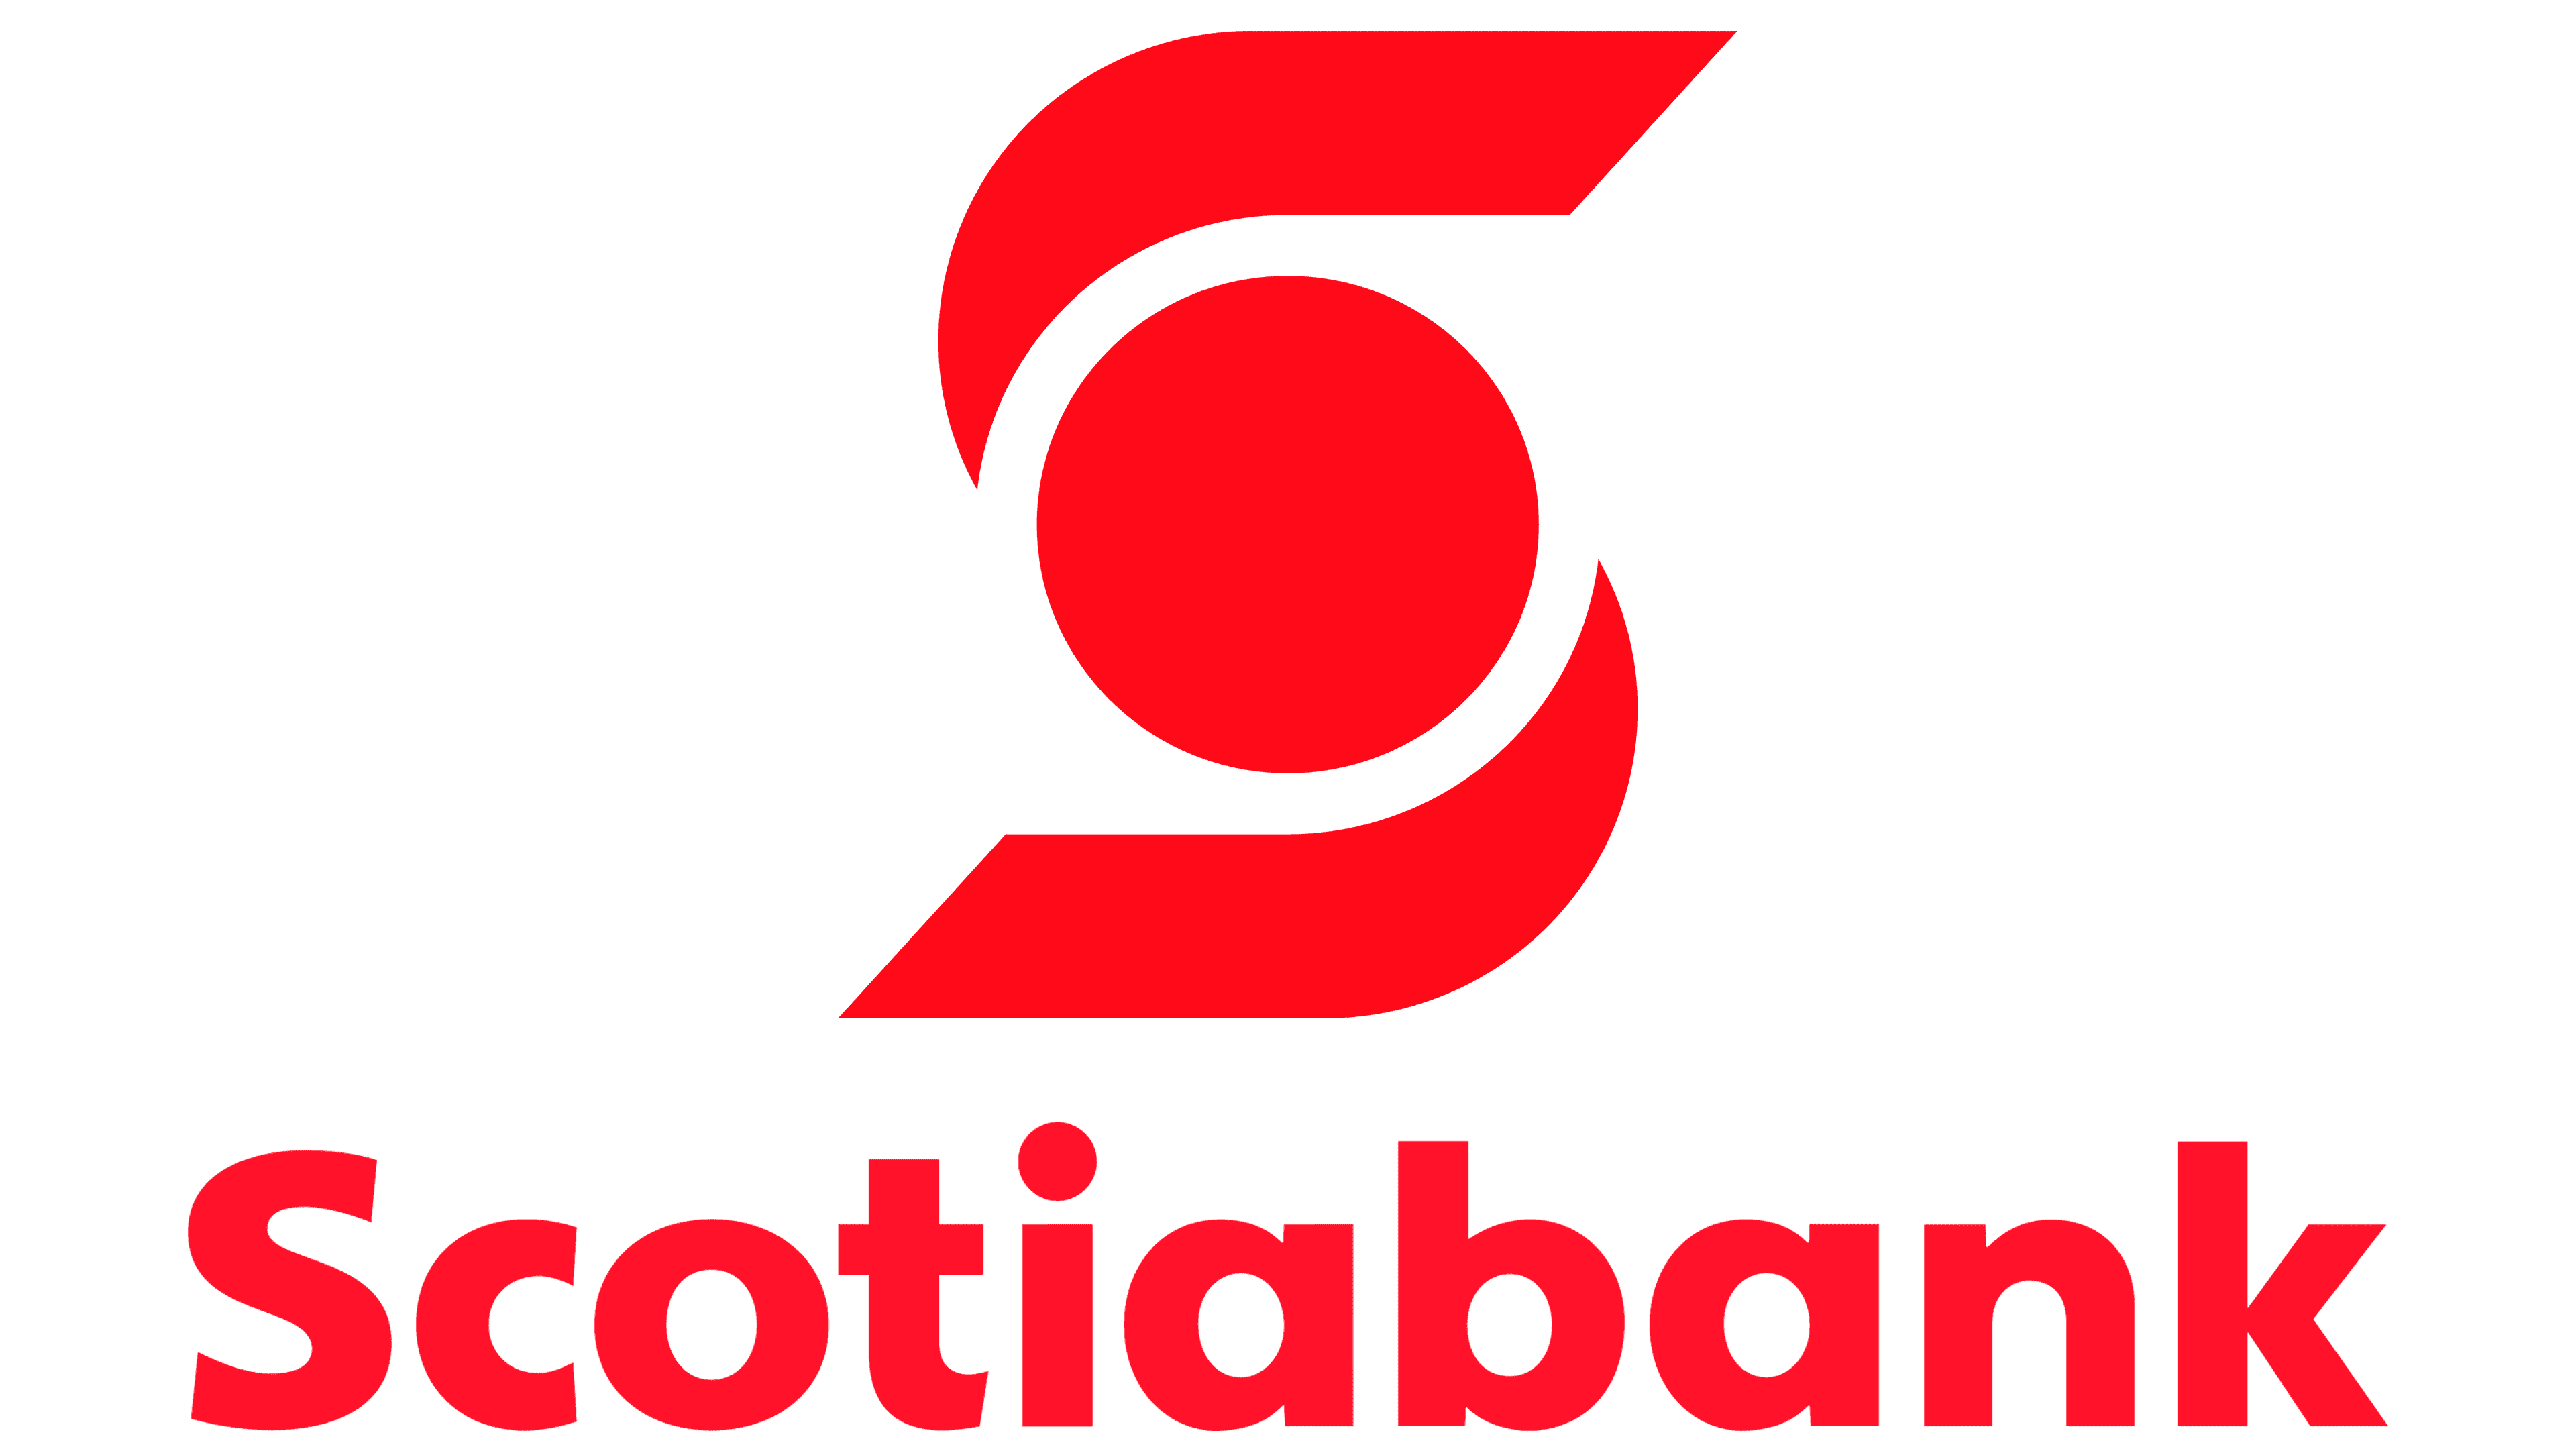 Scotiabank Long Term Non-Redeemable 3 Year GIC